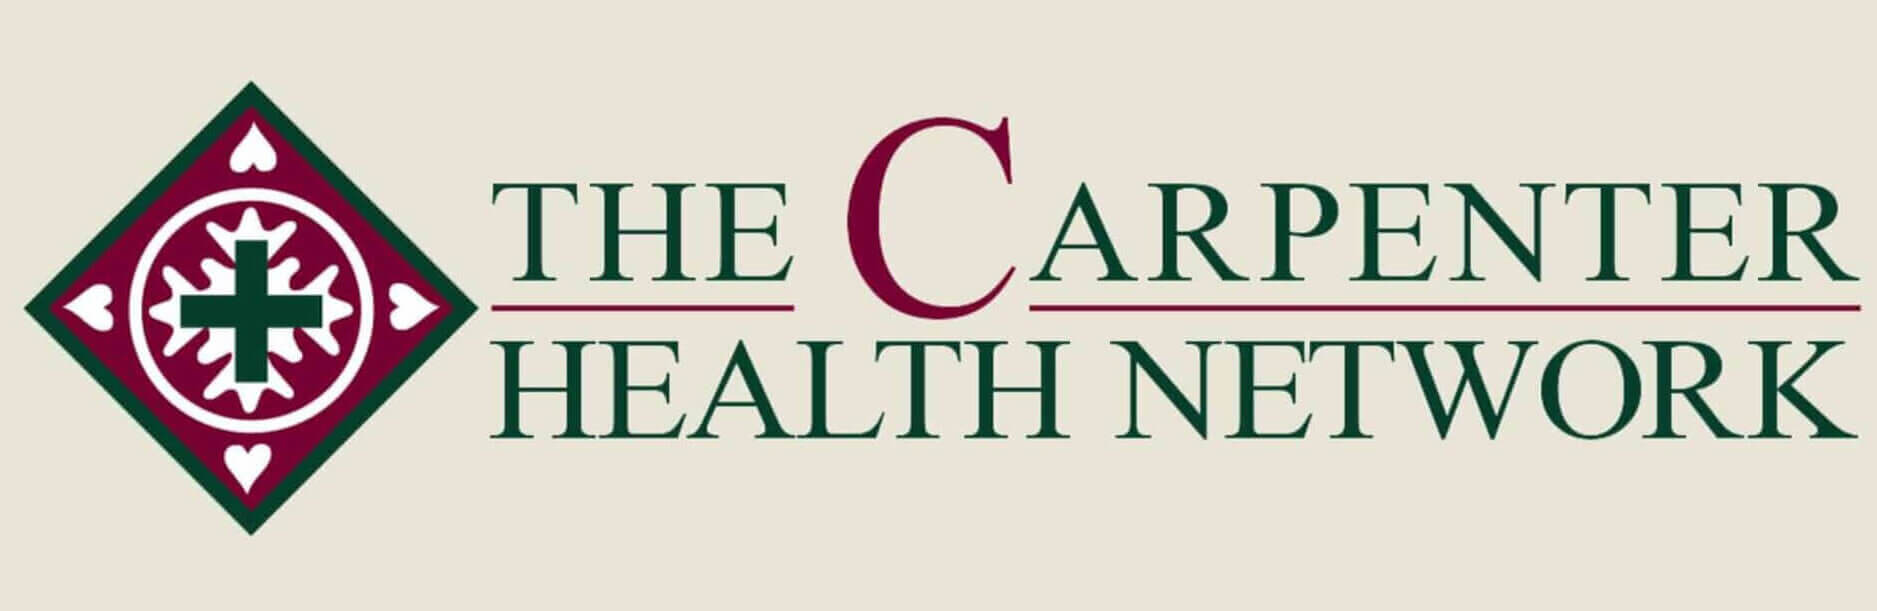 The Carpenter Health Network